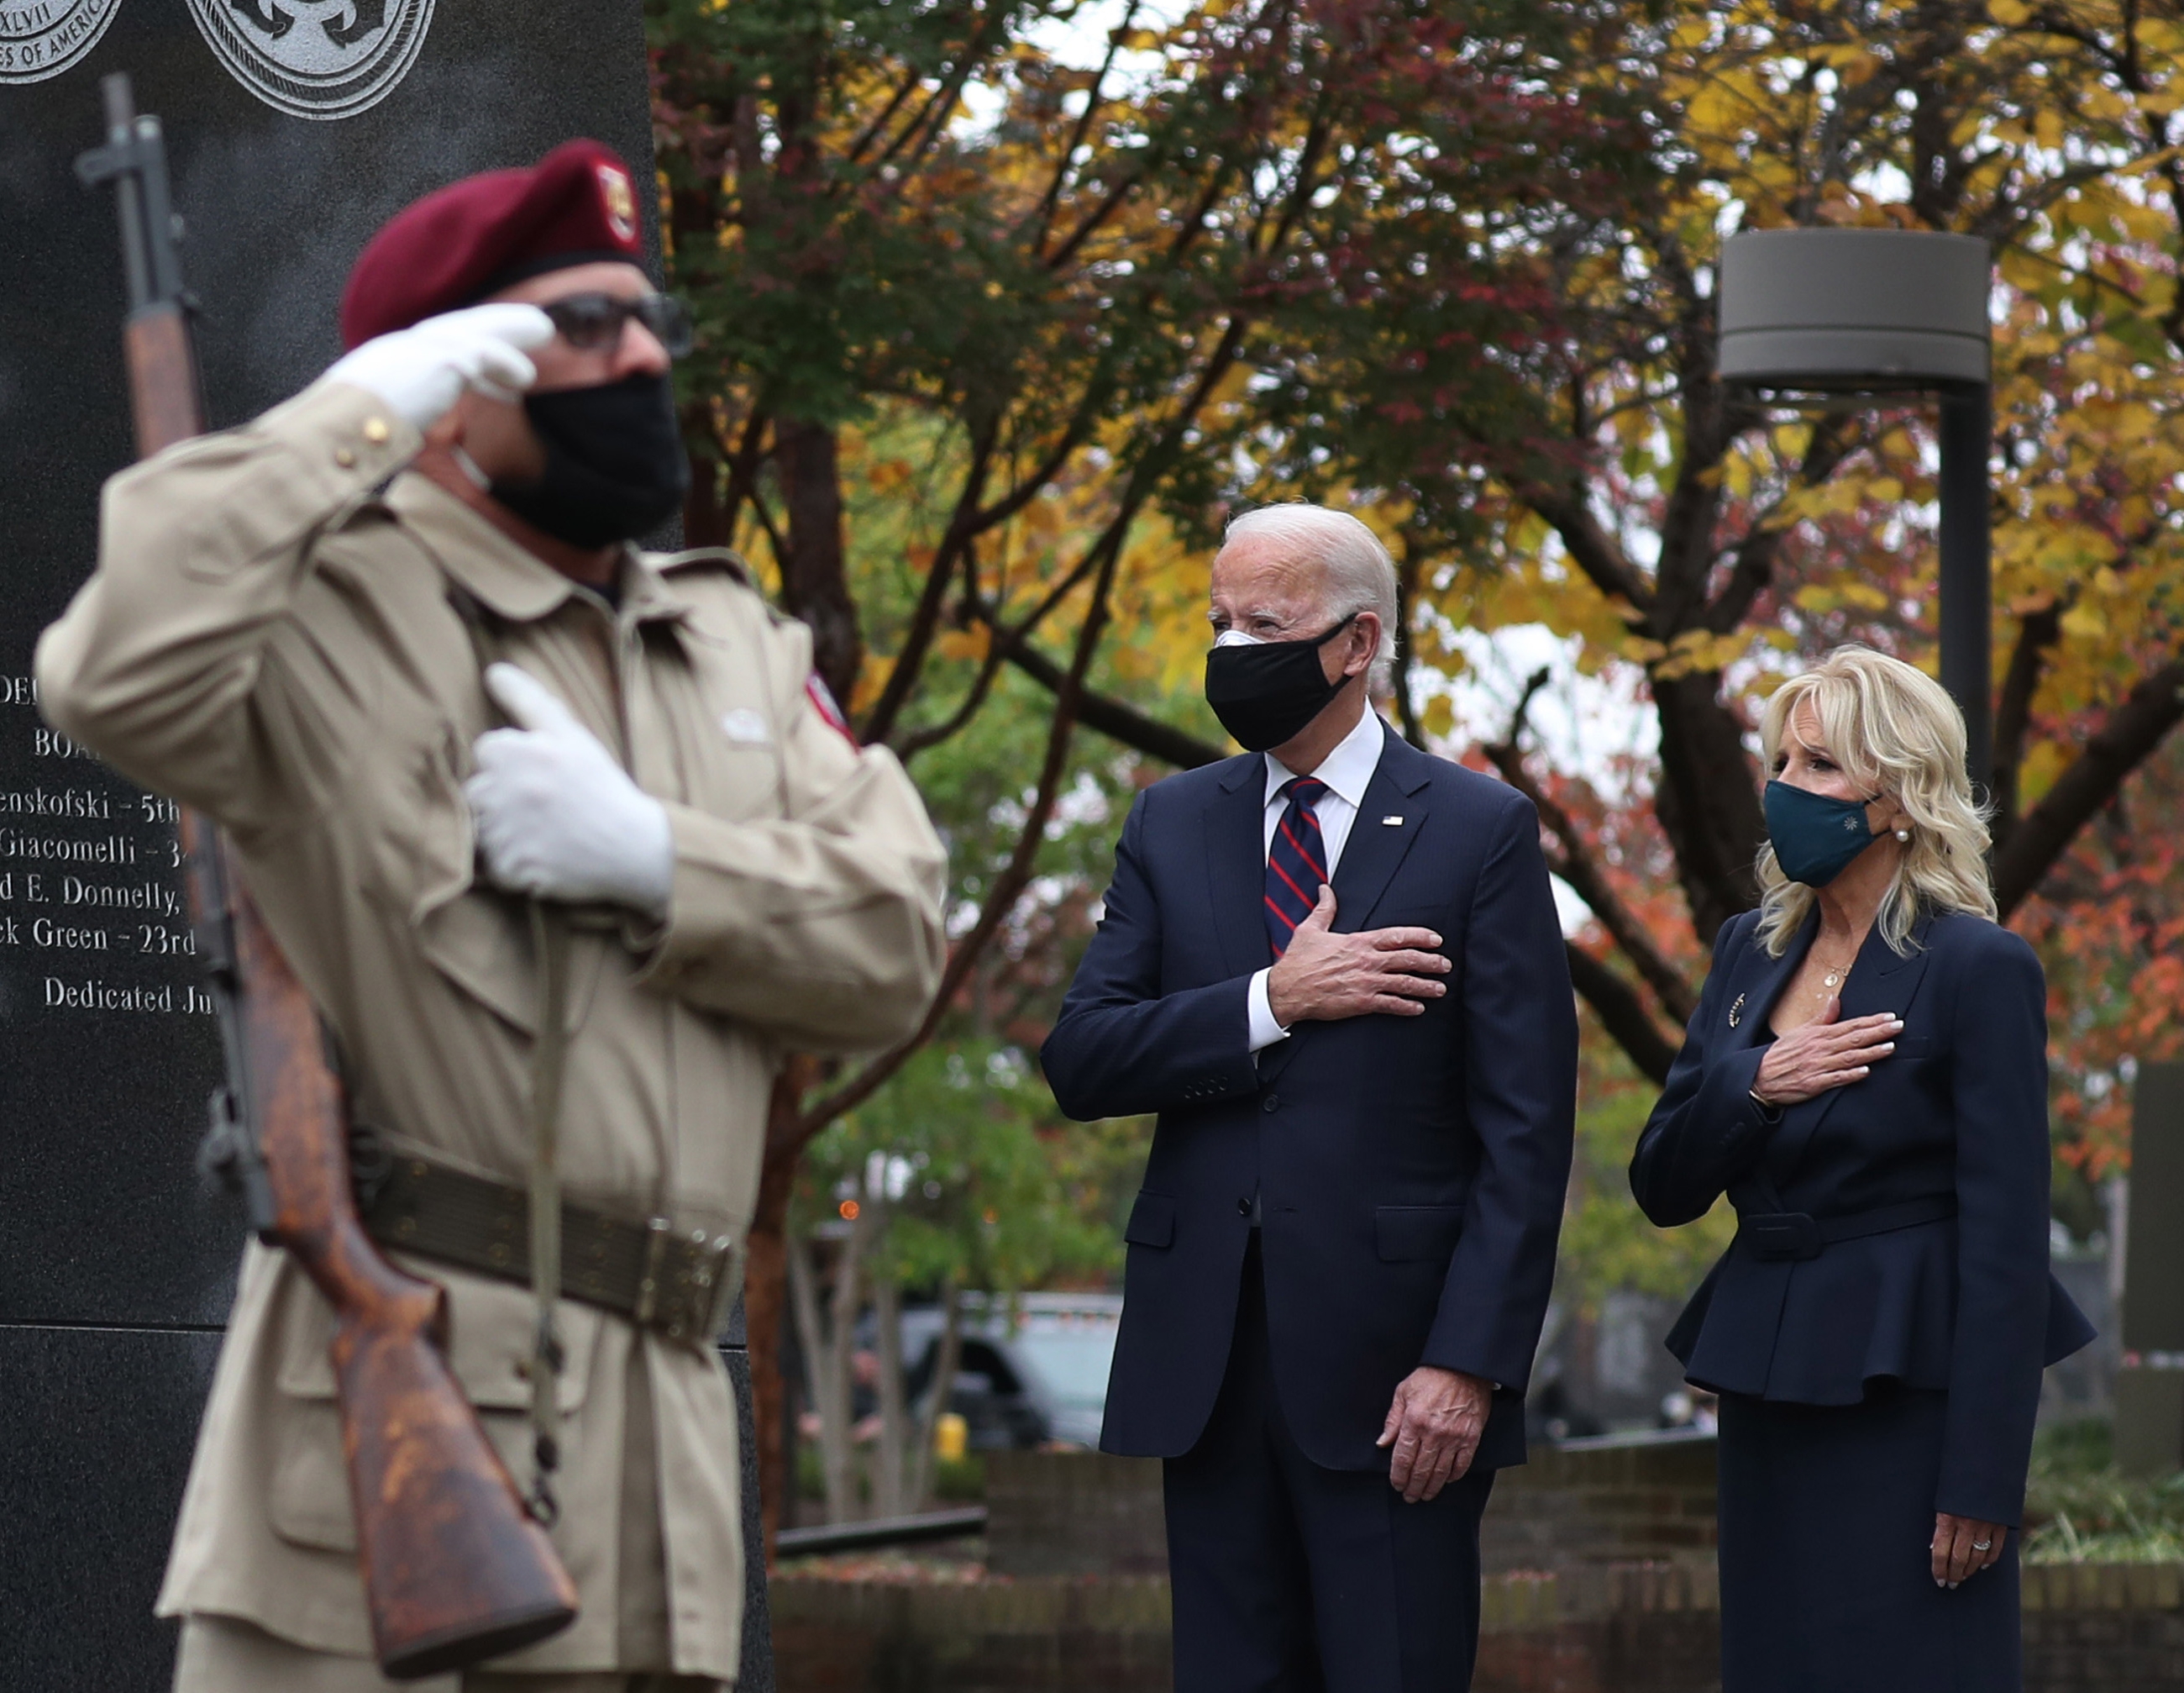 Joe Biden and his wife Jill pay respects during a Veterans Day stop at the Korean War Memorial Park in Philadelphia, Pennsylvania on 11 November.